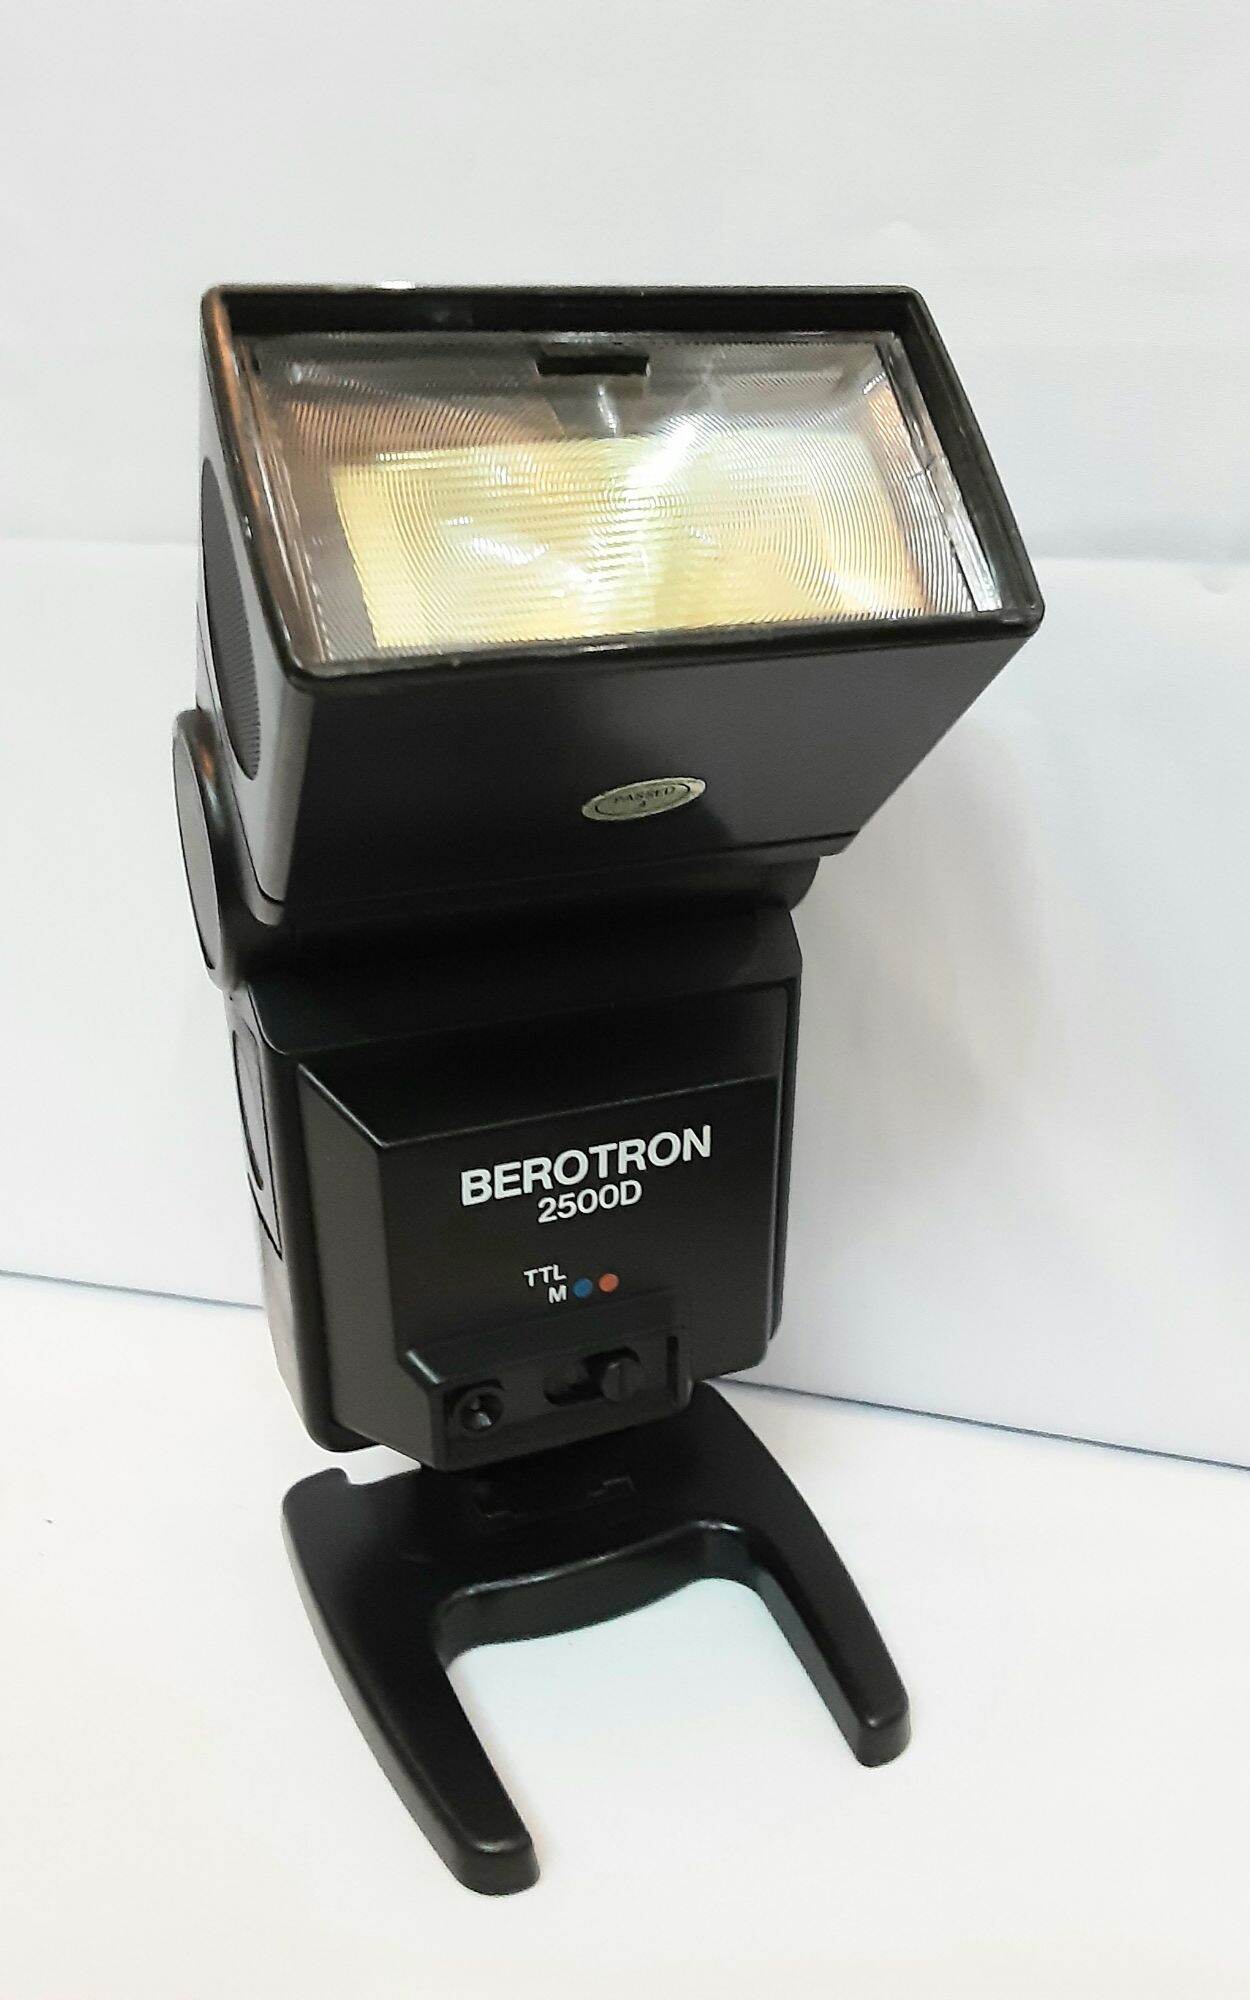 đèn flash for olympus/praktica hiệu BEROTRON 2500D